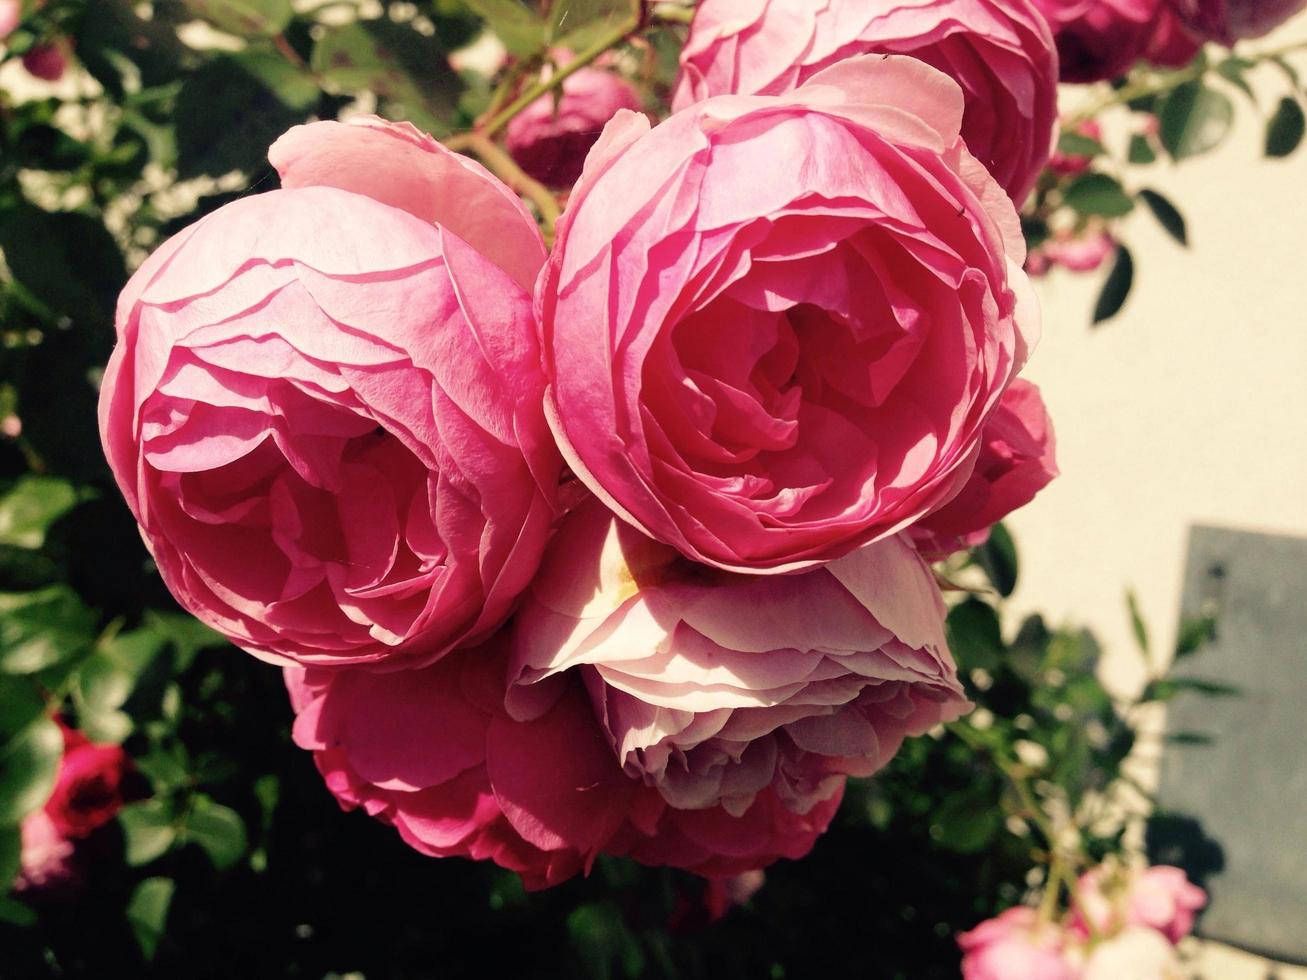 rosas cor de rosa no jardim foto